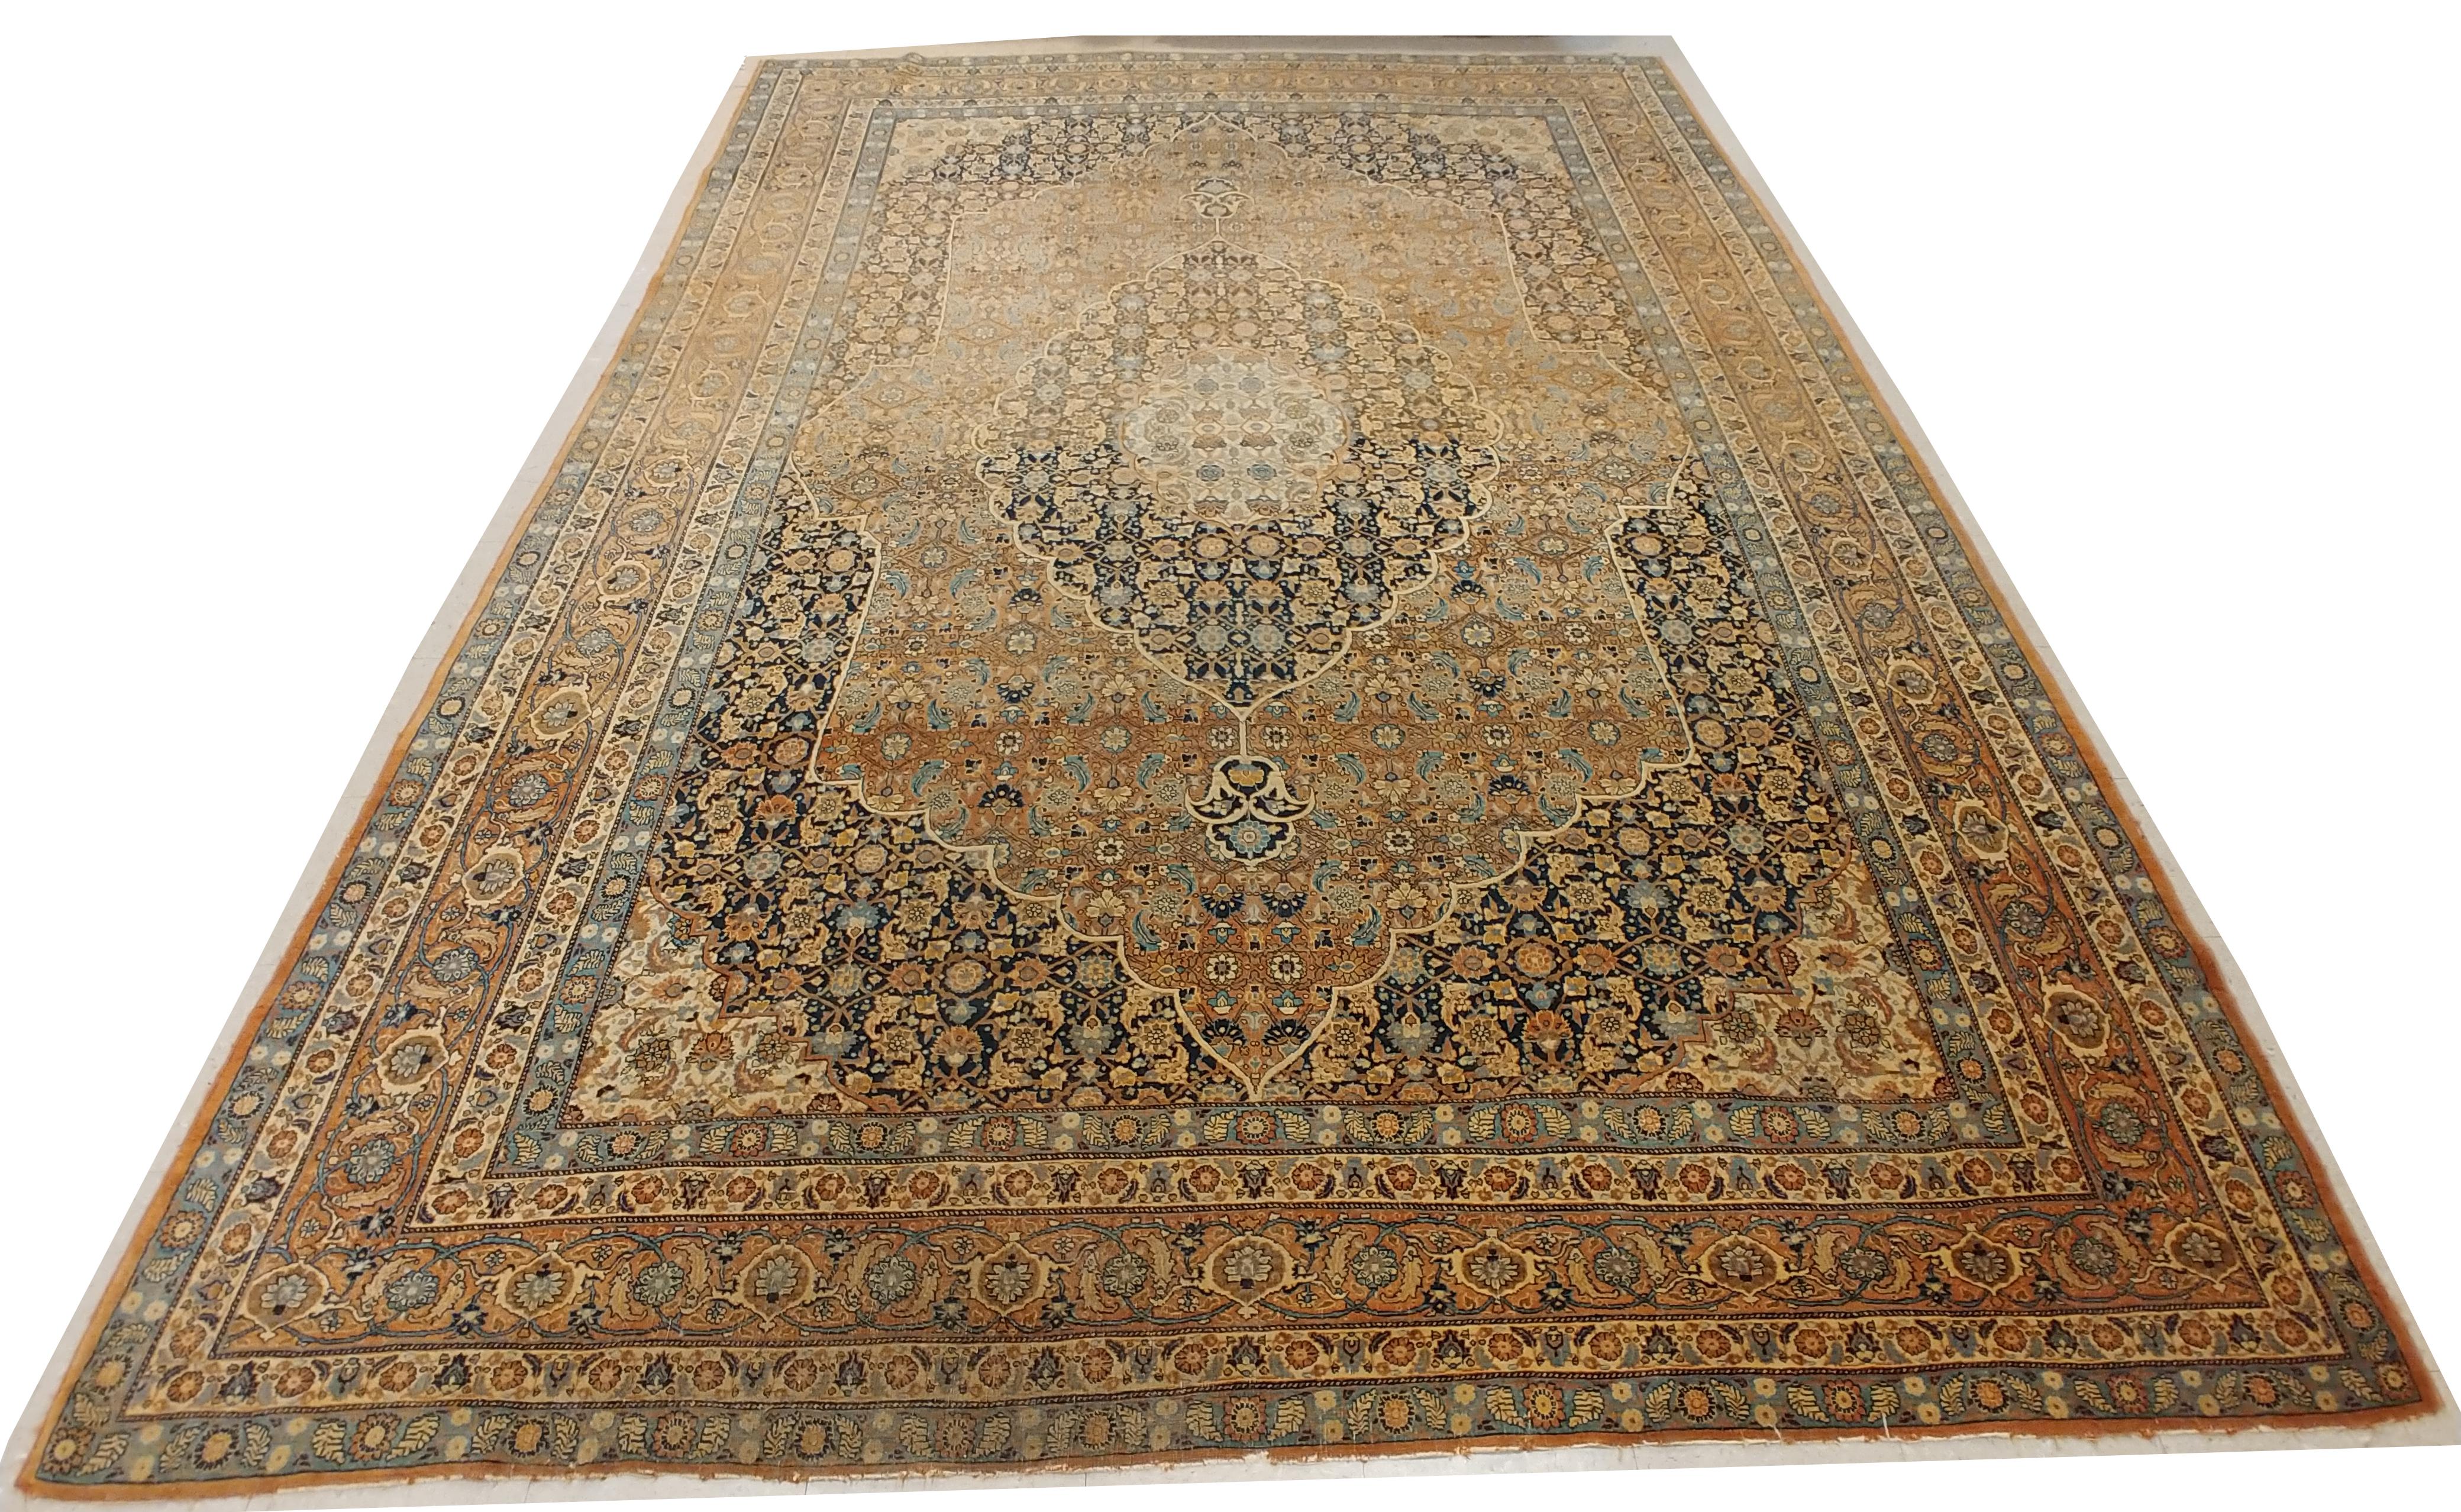 Antique Tabriz Carpet, Hadji Jalili Persian Rug, Earth Tones, Brown, Terracotta 4